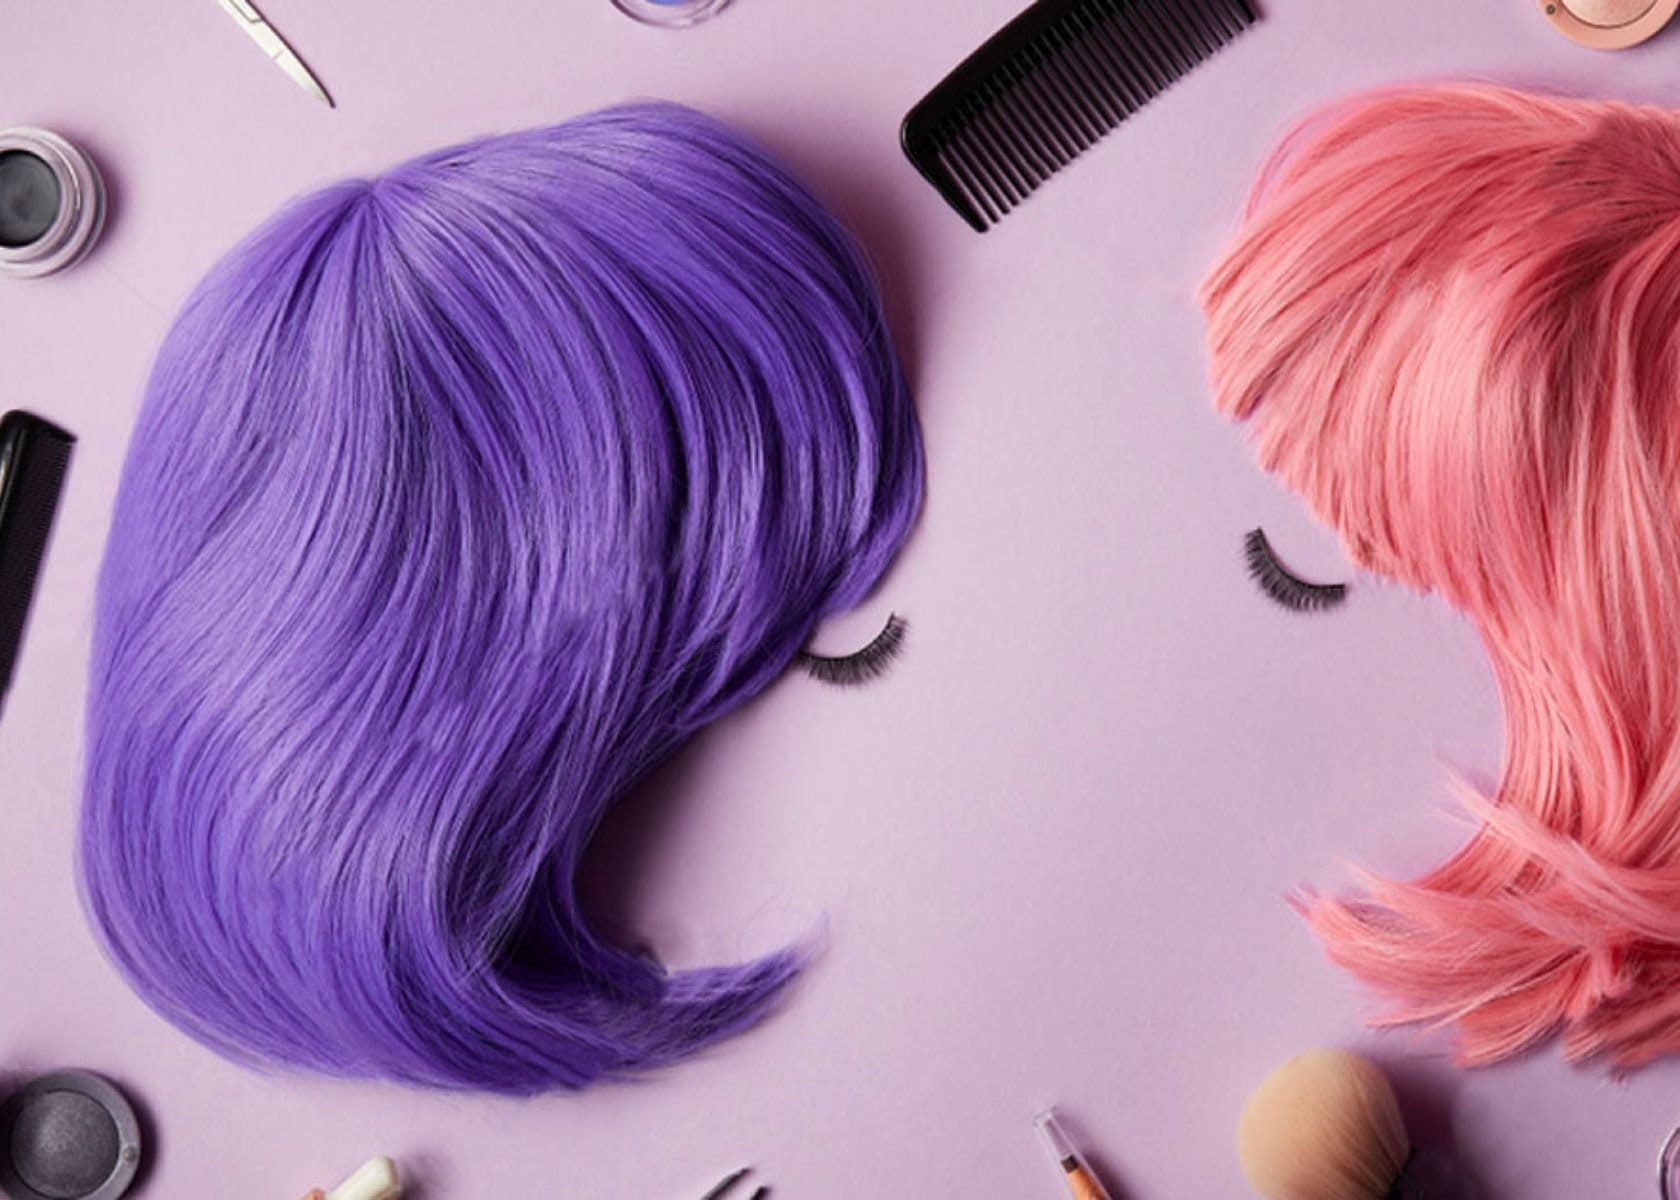 Can You Dye a Human Hair Wig?